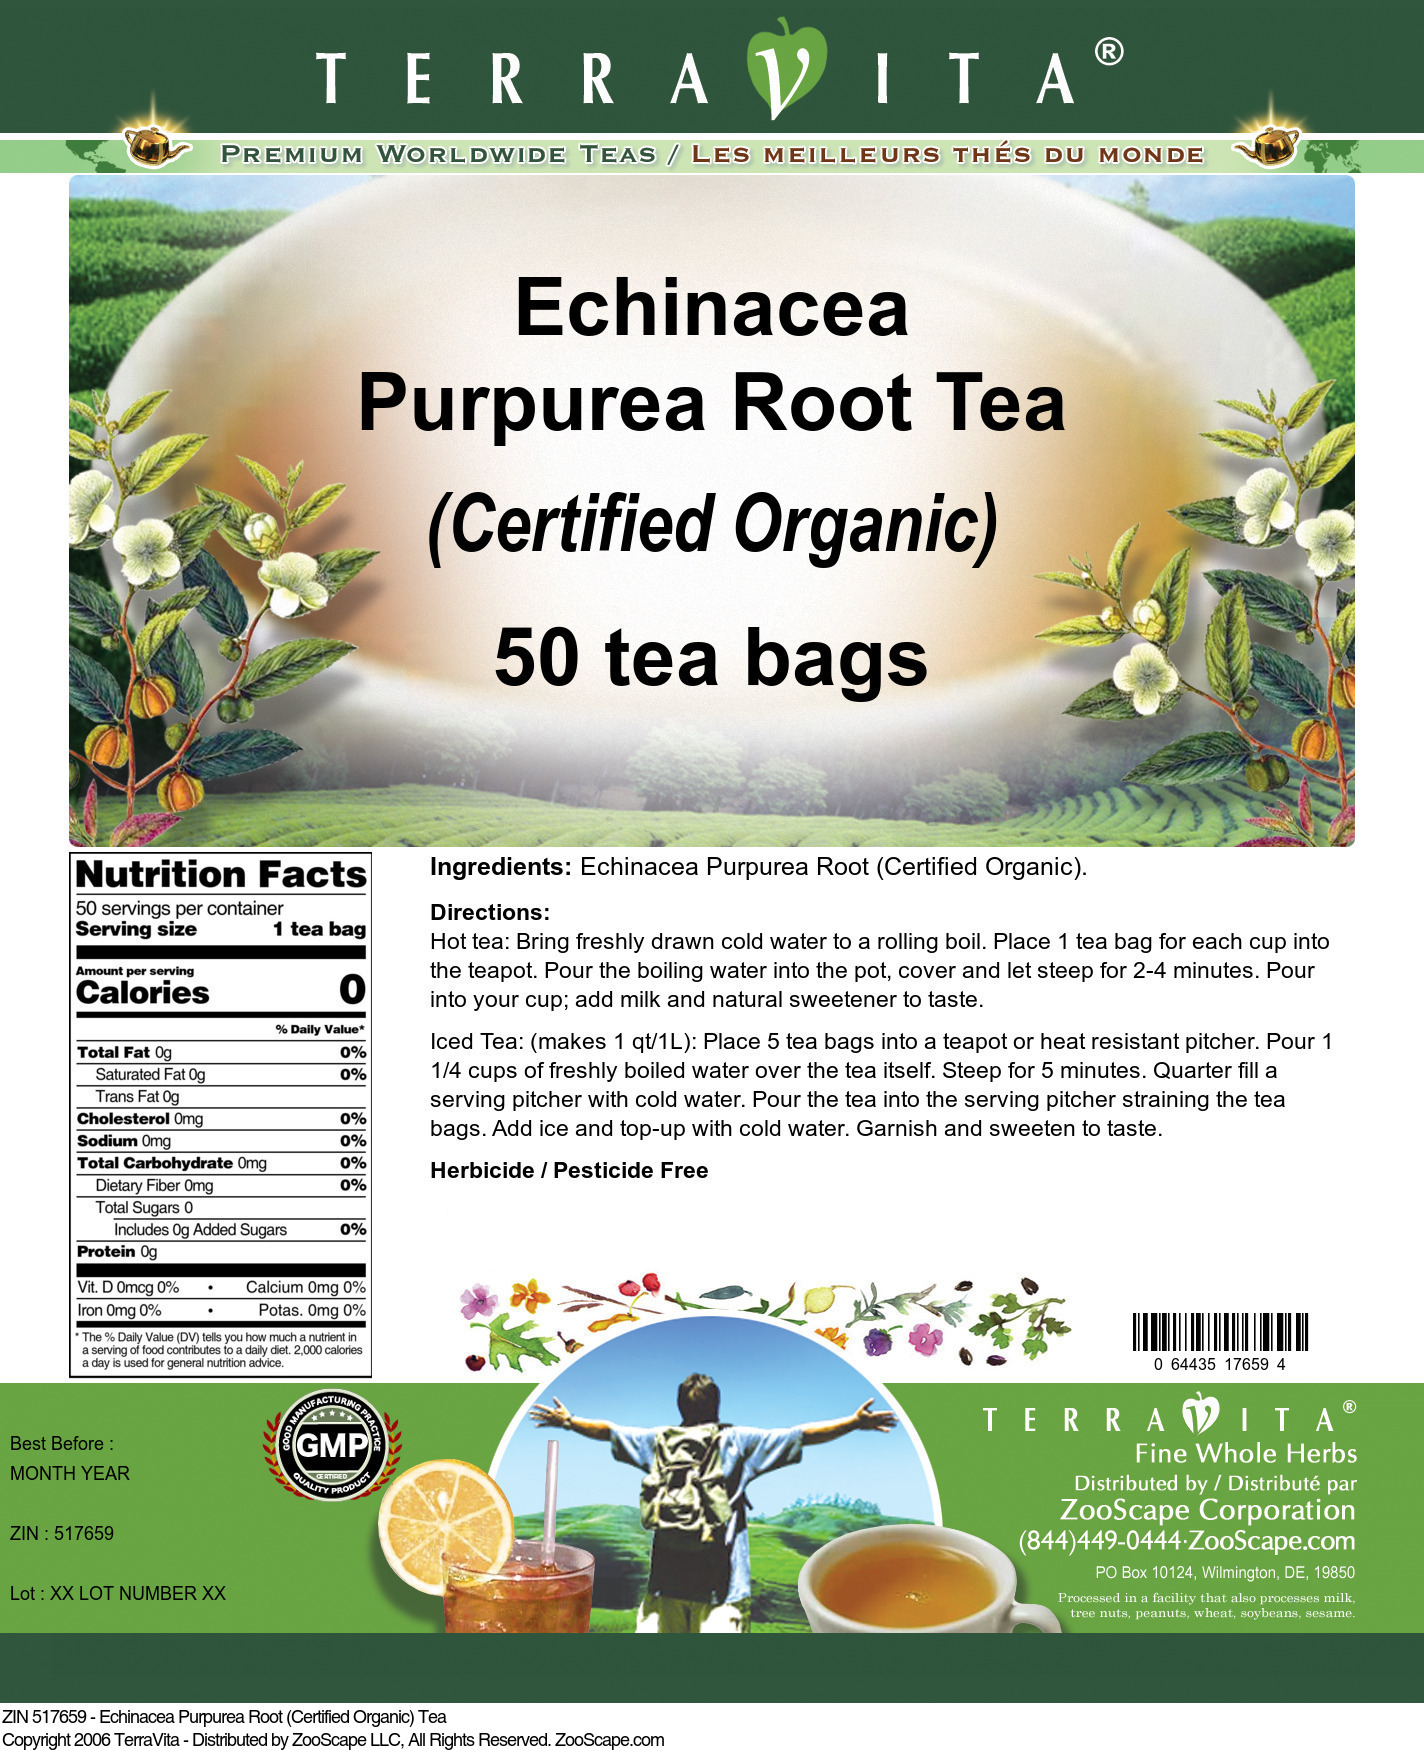 Echinacea Purpurea Root (Certified Organic) Tea - Label